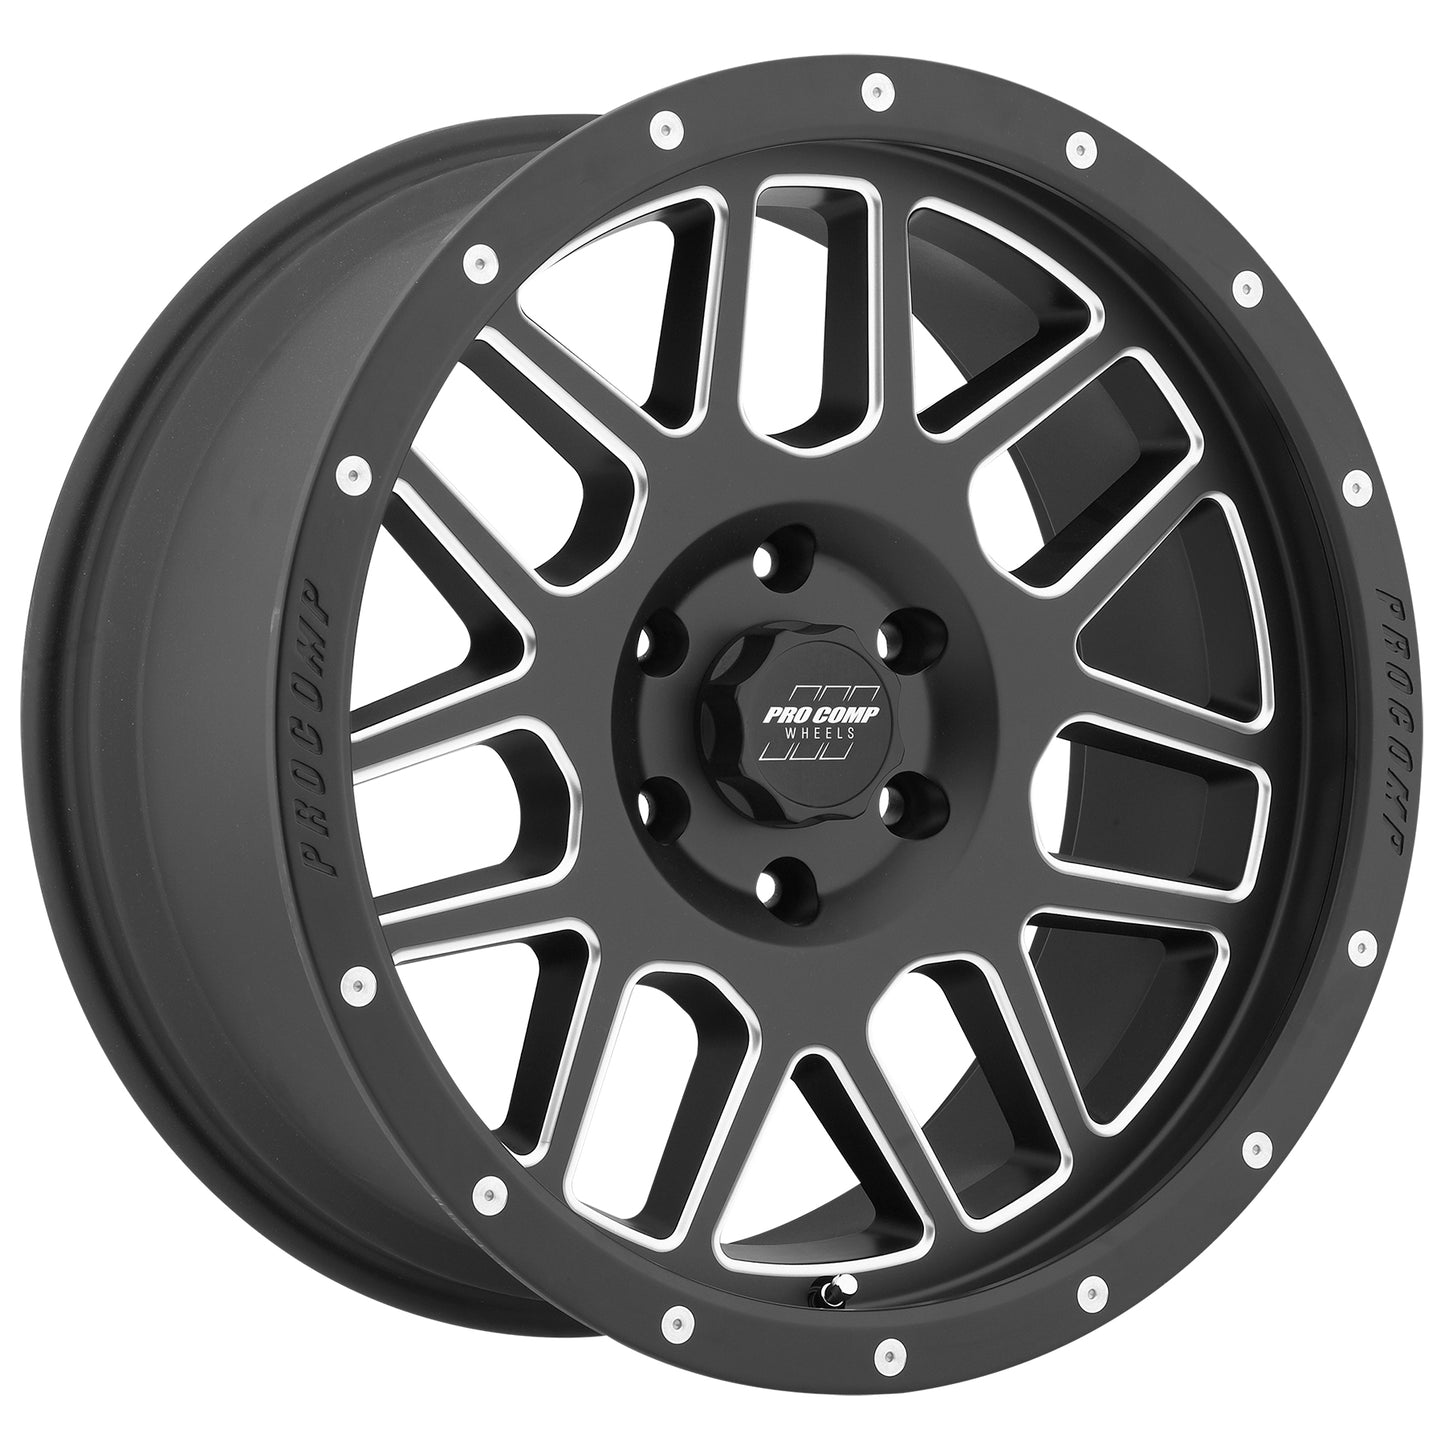 Pro Comp Wheels Vertigo Satin Black Milled 18x9 6x5.5 5BS Offset 0mm Cap P/N 5040556000 5140-898350